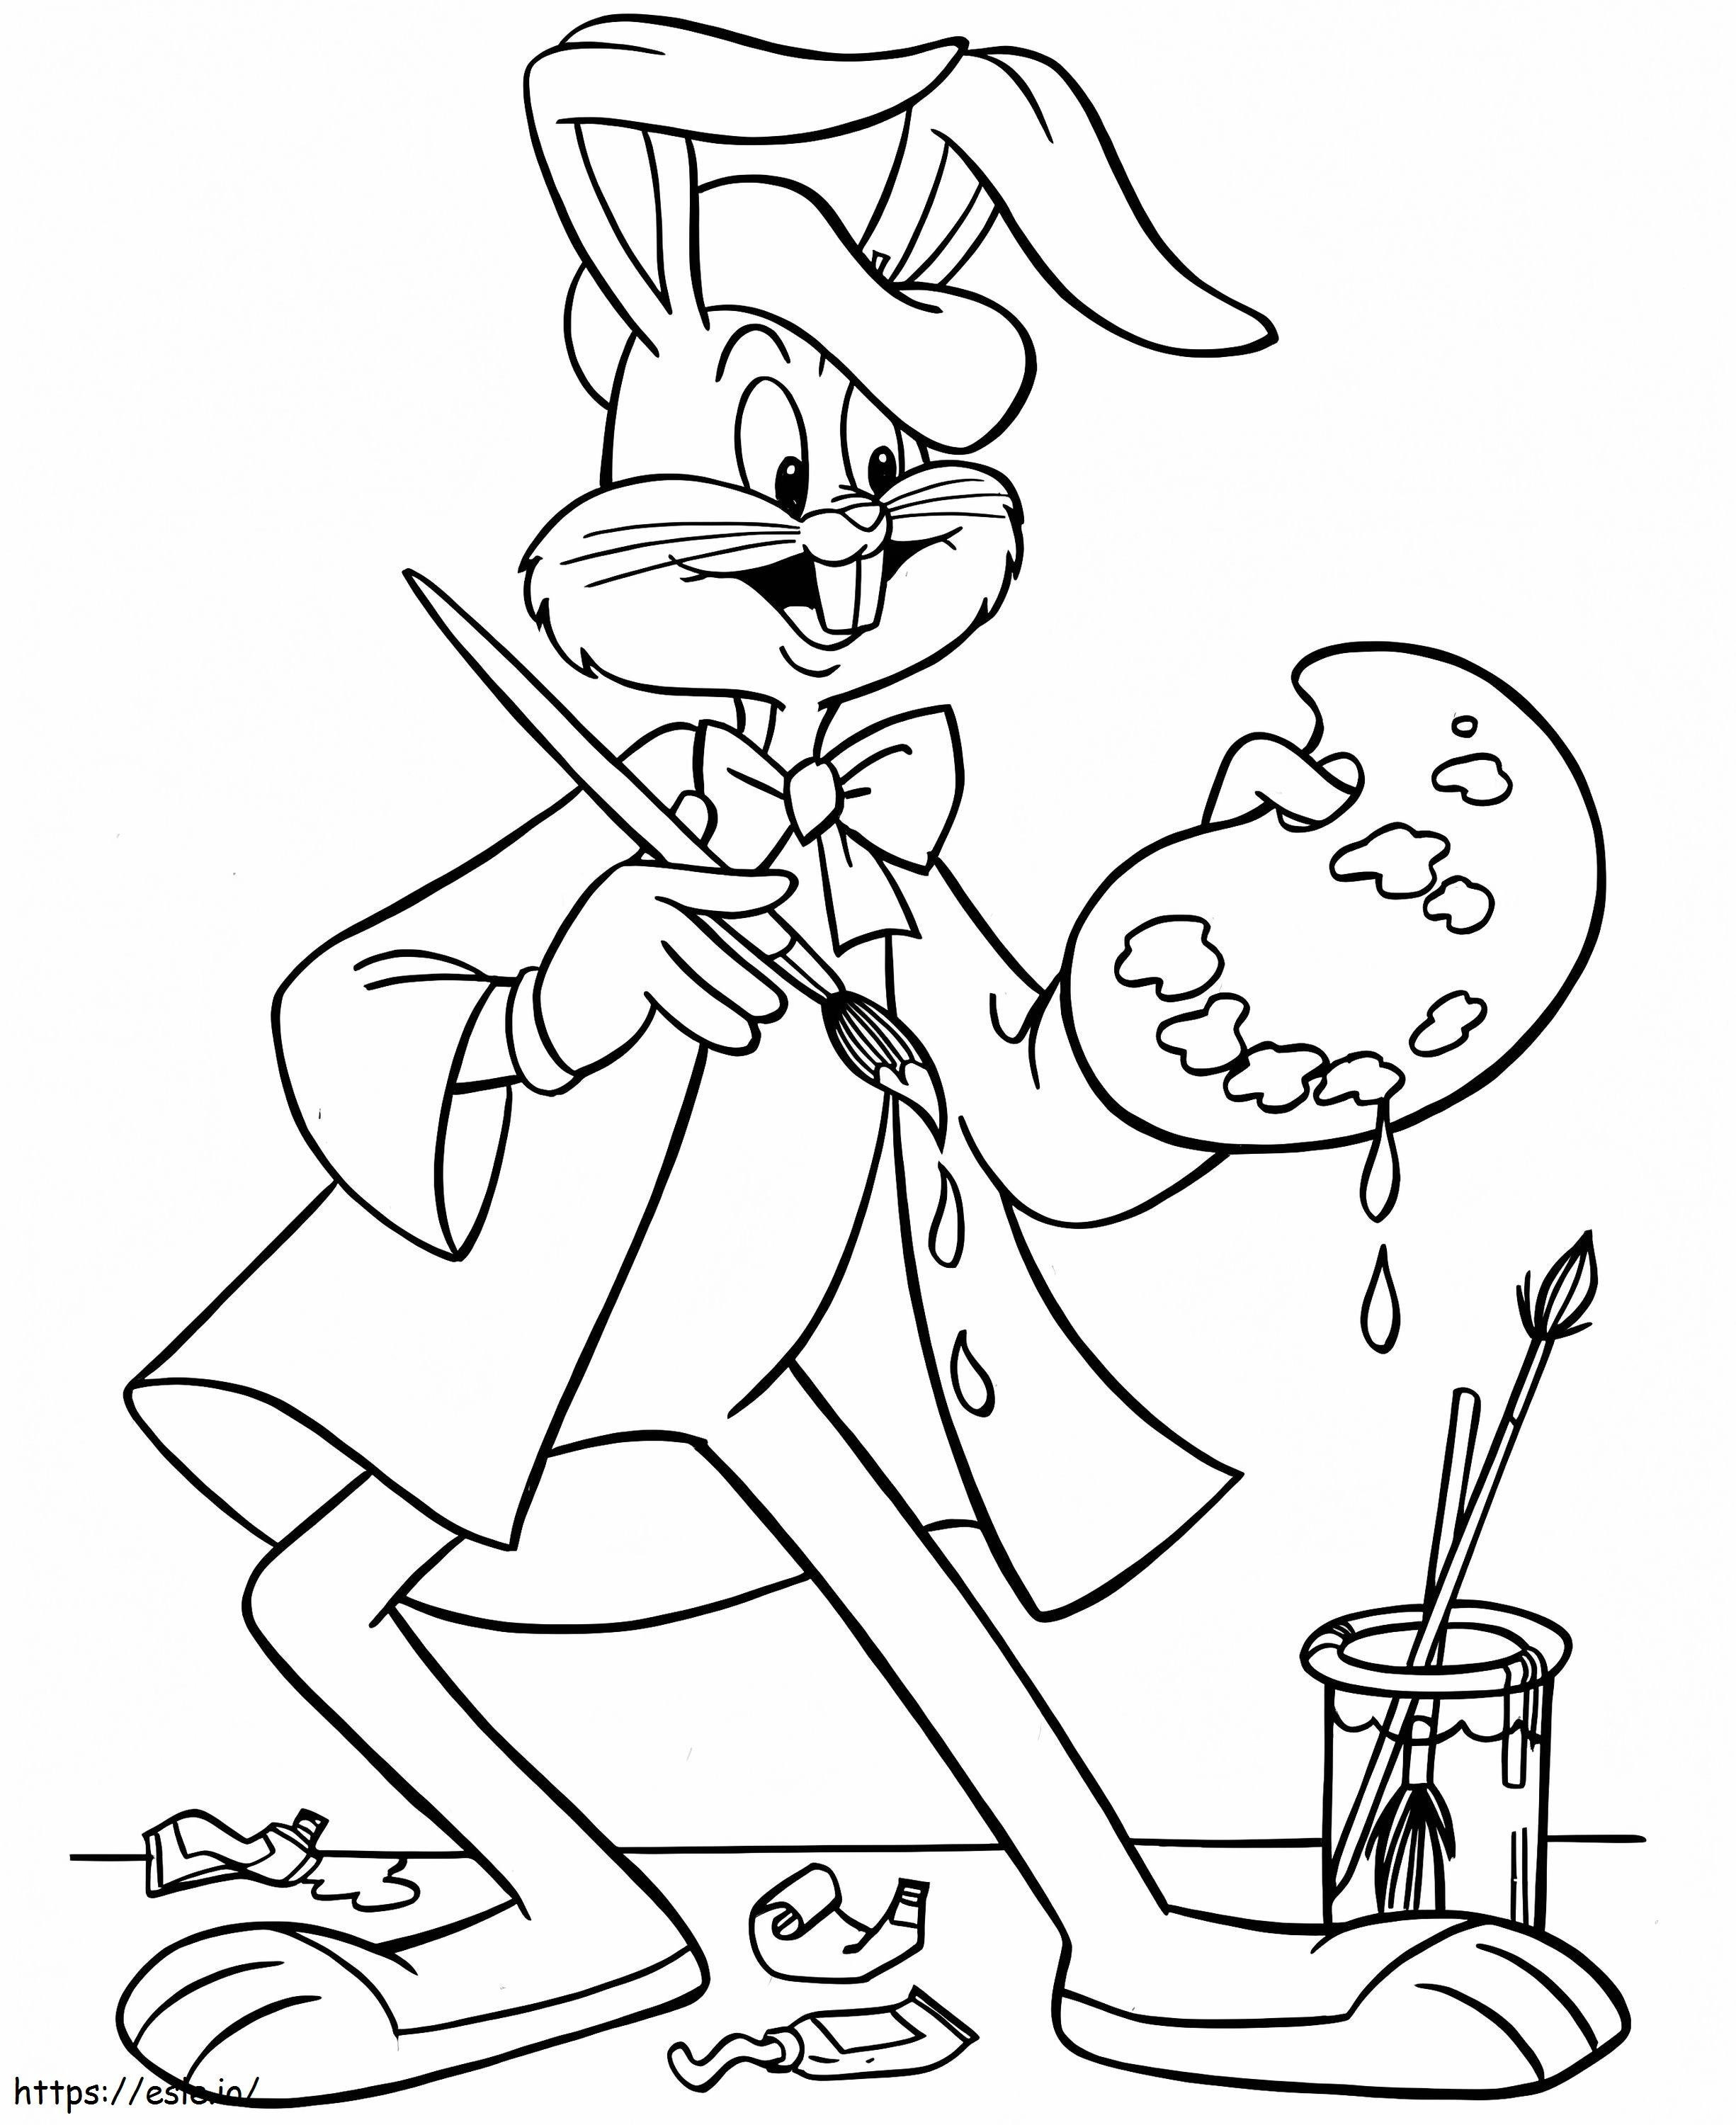 Coloriage Coloriage Bugs Bunny à imprimer dessin